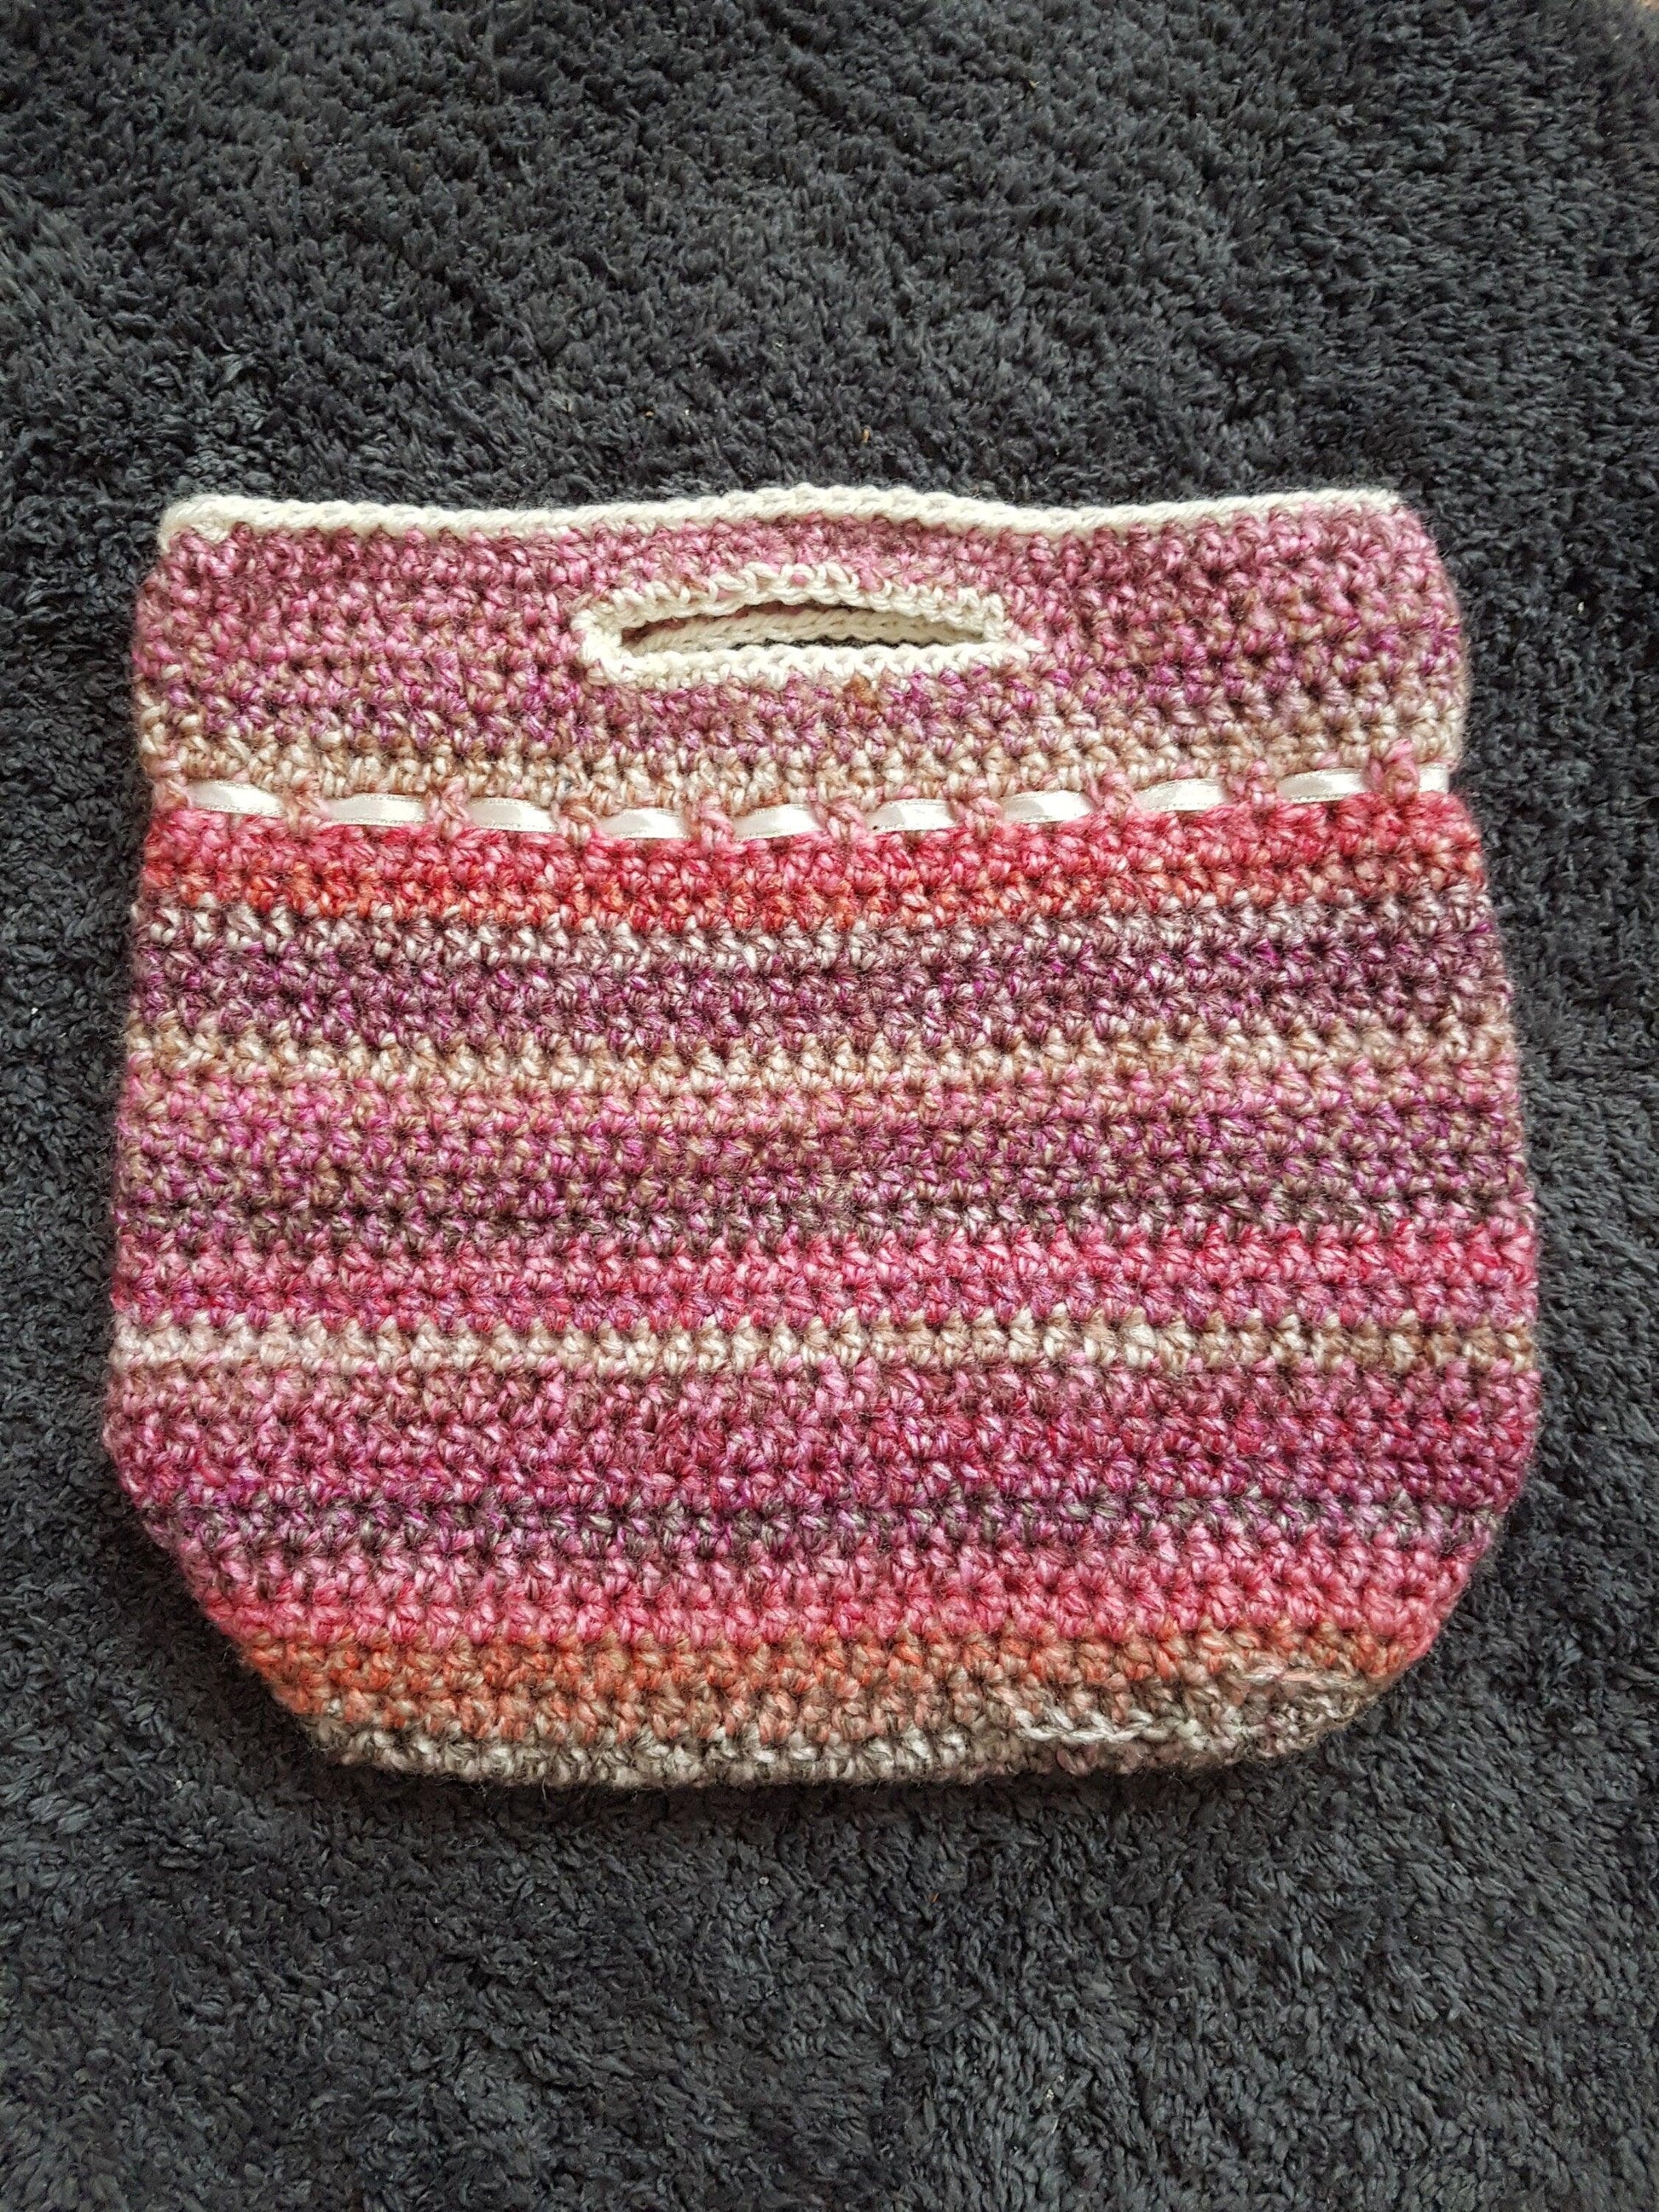 Handmade crochet handbag in mixed pink yarn. Back of the bag shown on floor to show detail